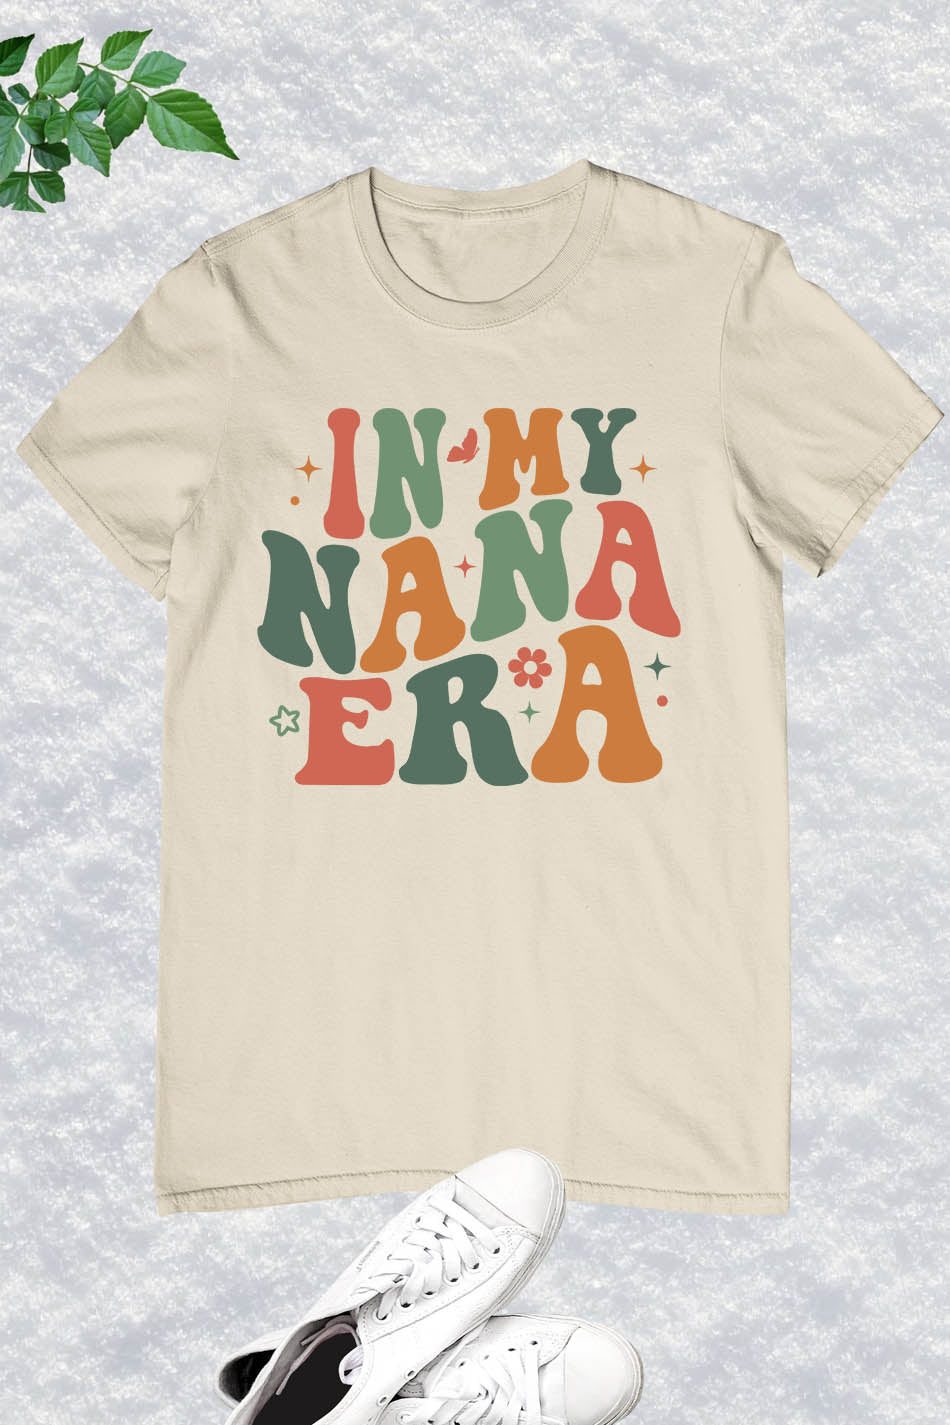 In My Nana Era Shirt Granny T-shirt